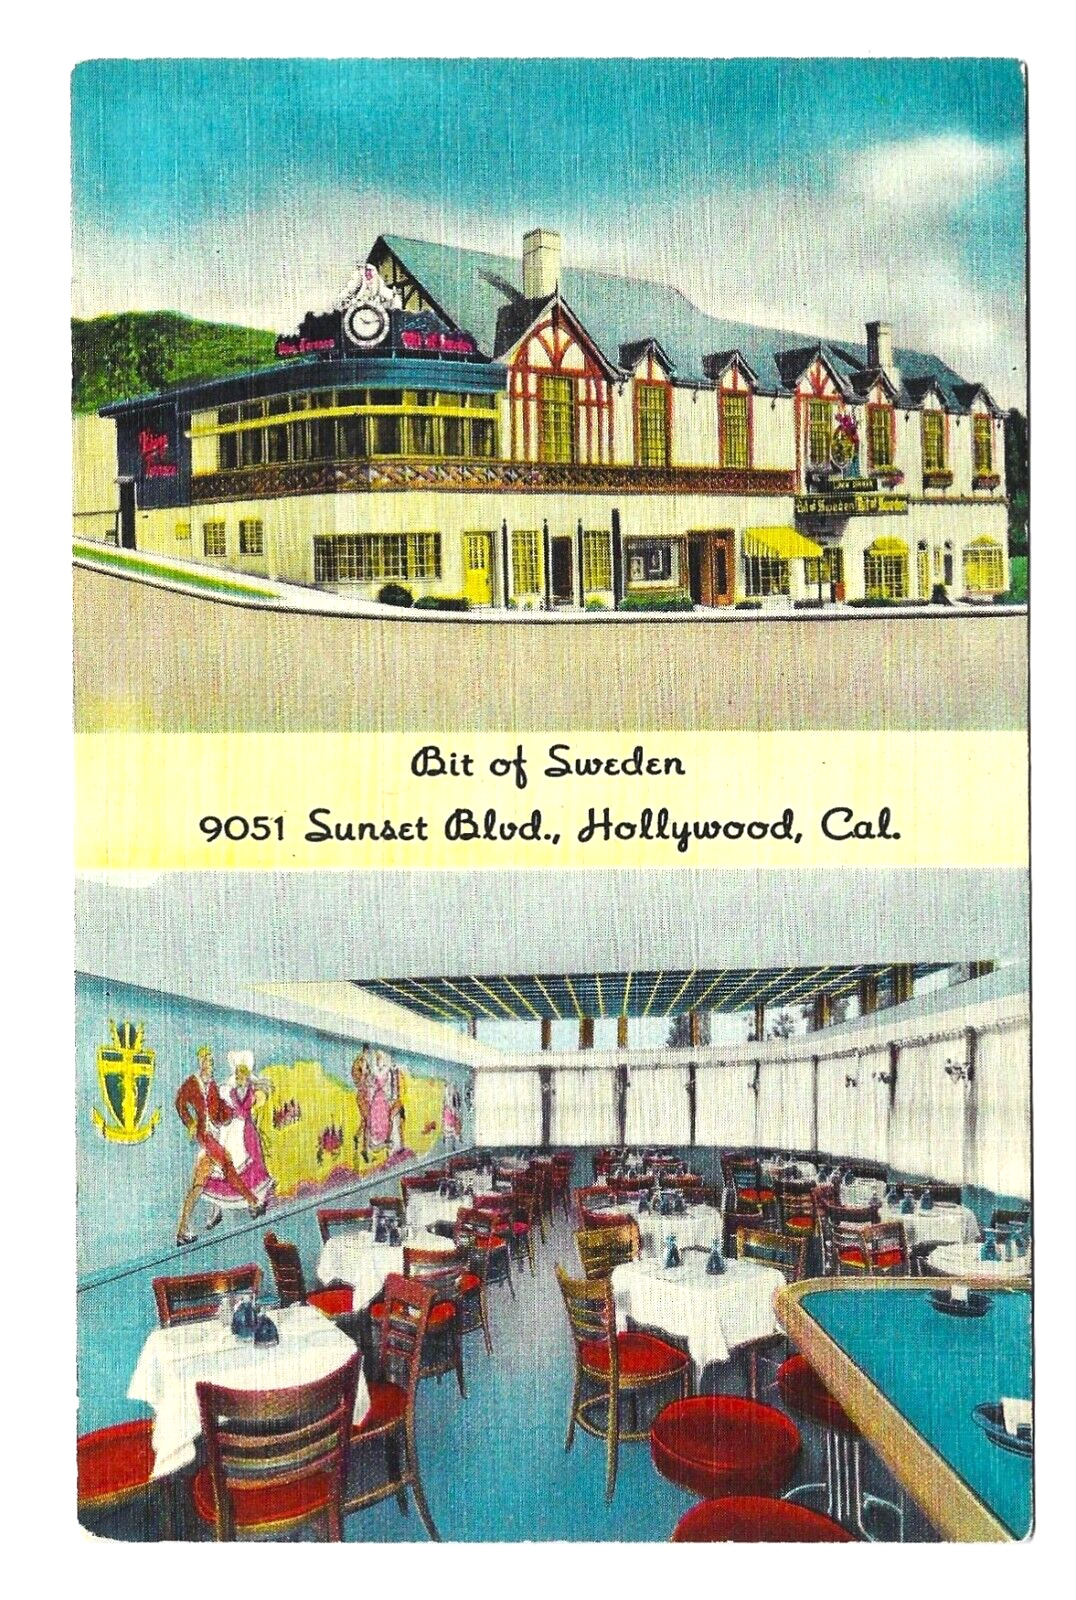 BIT OF SWEDEN, 9051 SUNSET BLVD., HOLLYWOOD, CAL. - 1940s Linen Postcard